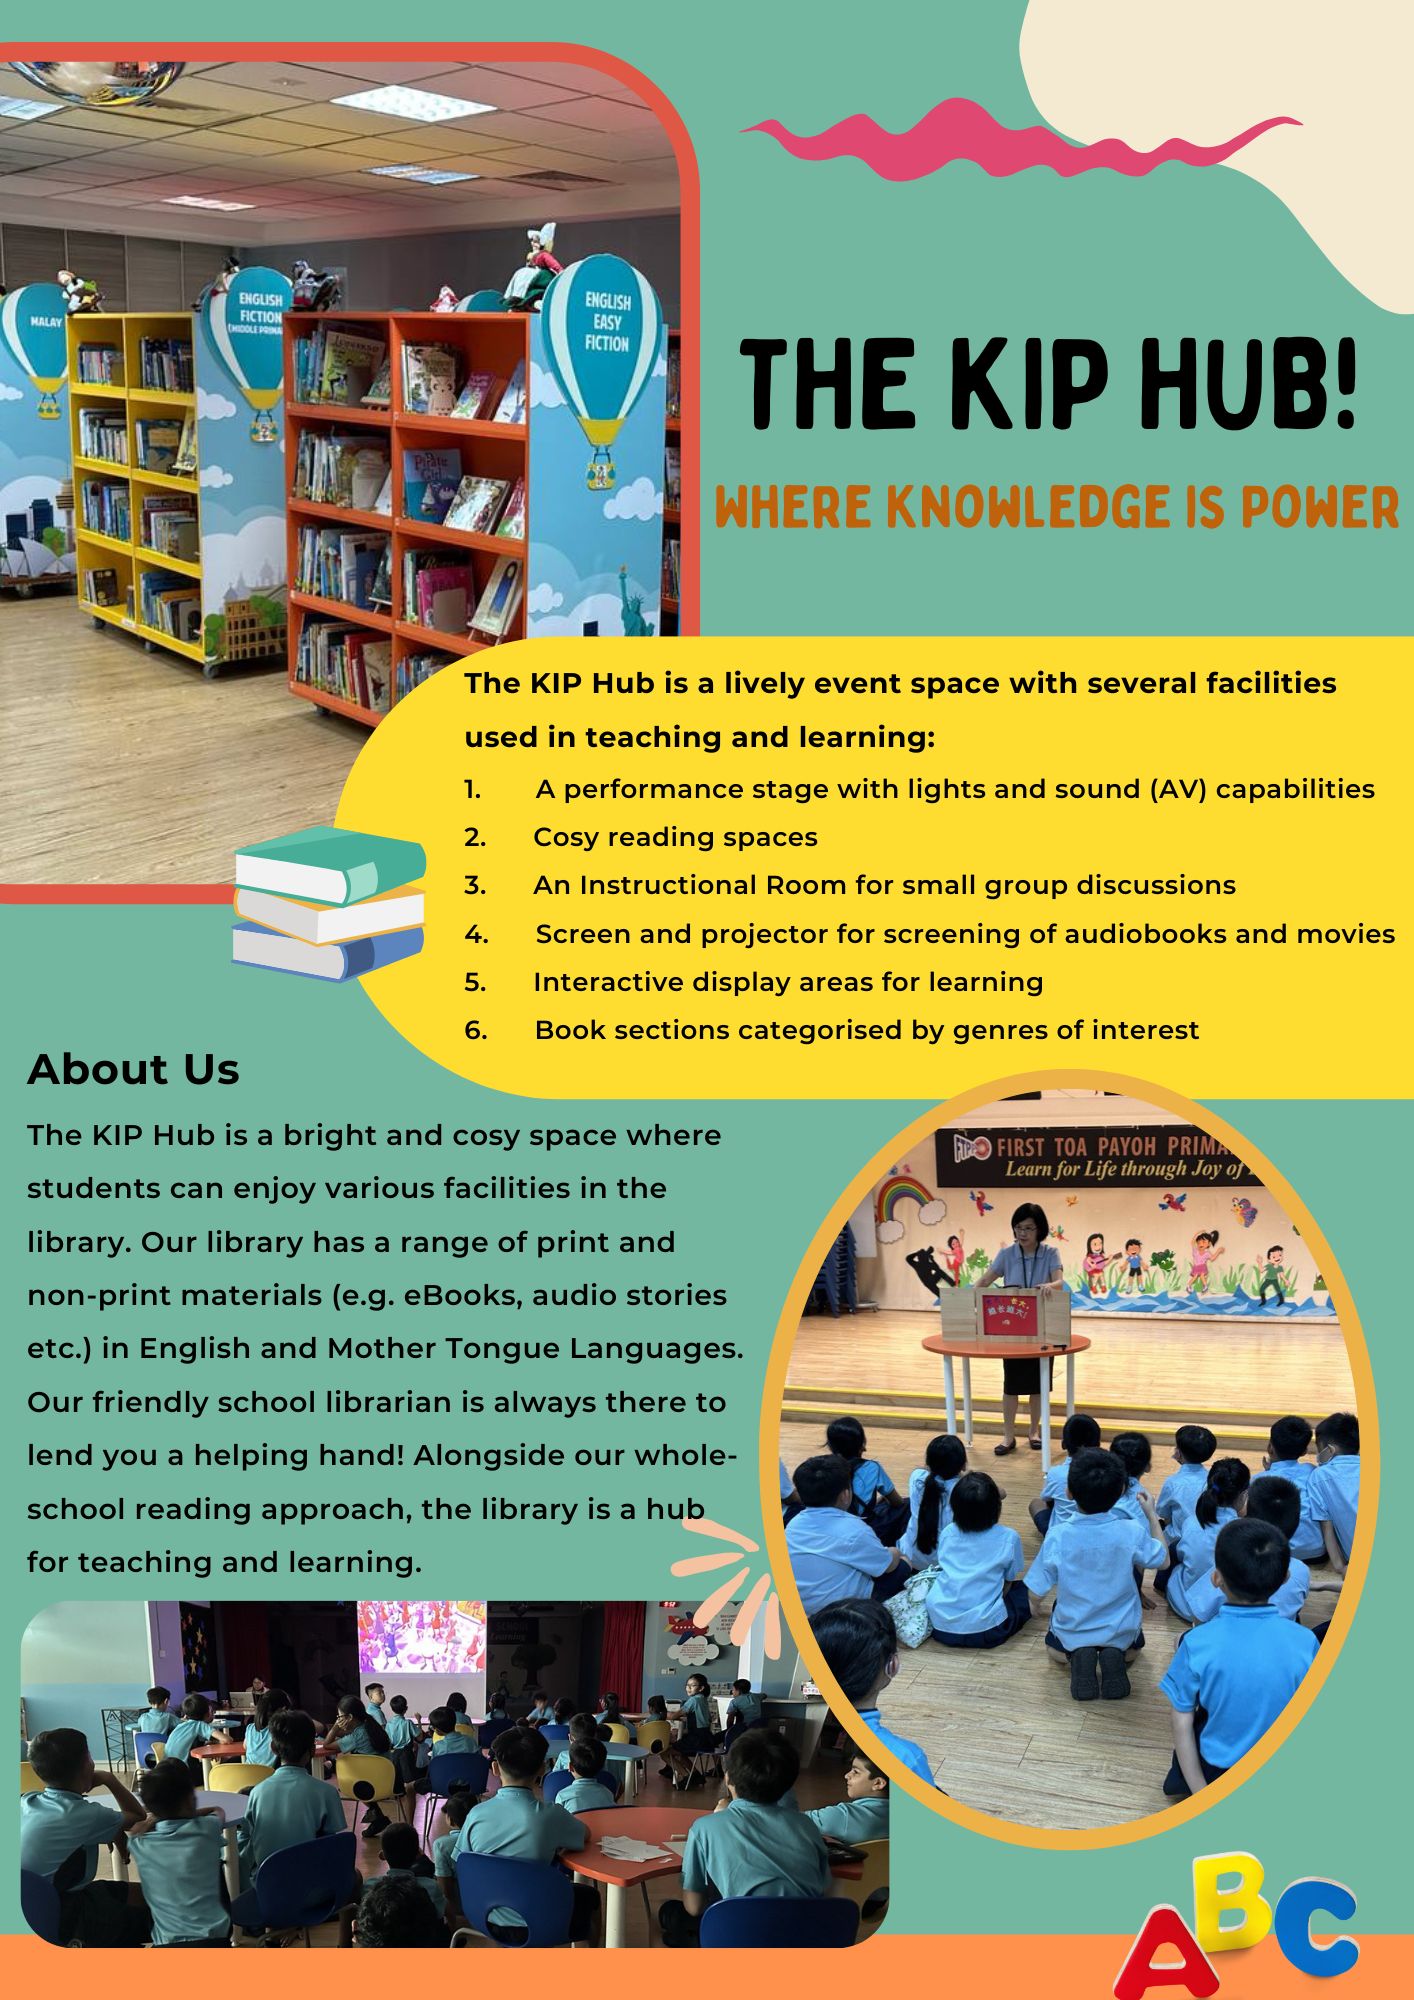 The KIP HUB